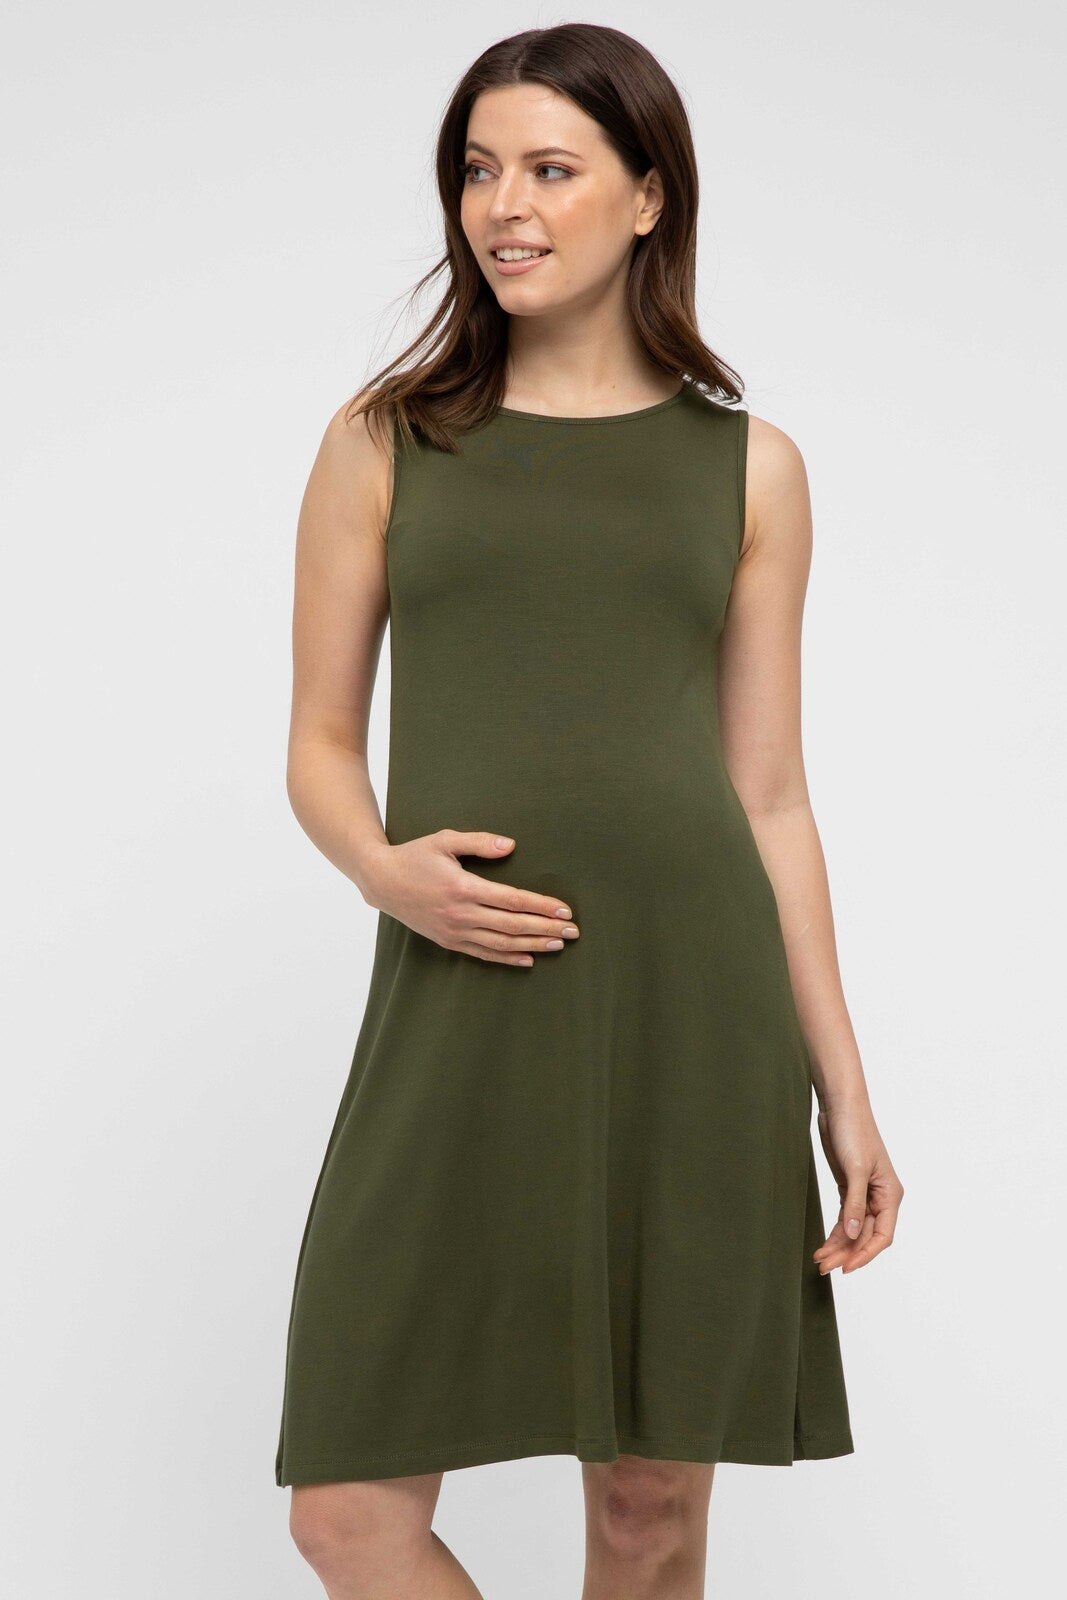 Organic Bamboo Adele Maternity Dress Dress from Bamboo Body maternity online store brisbane sydney perth australia